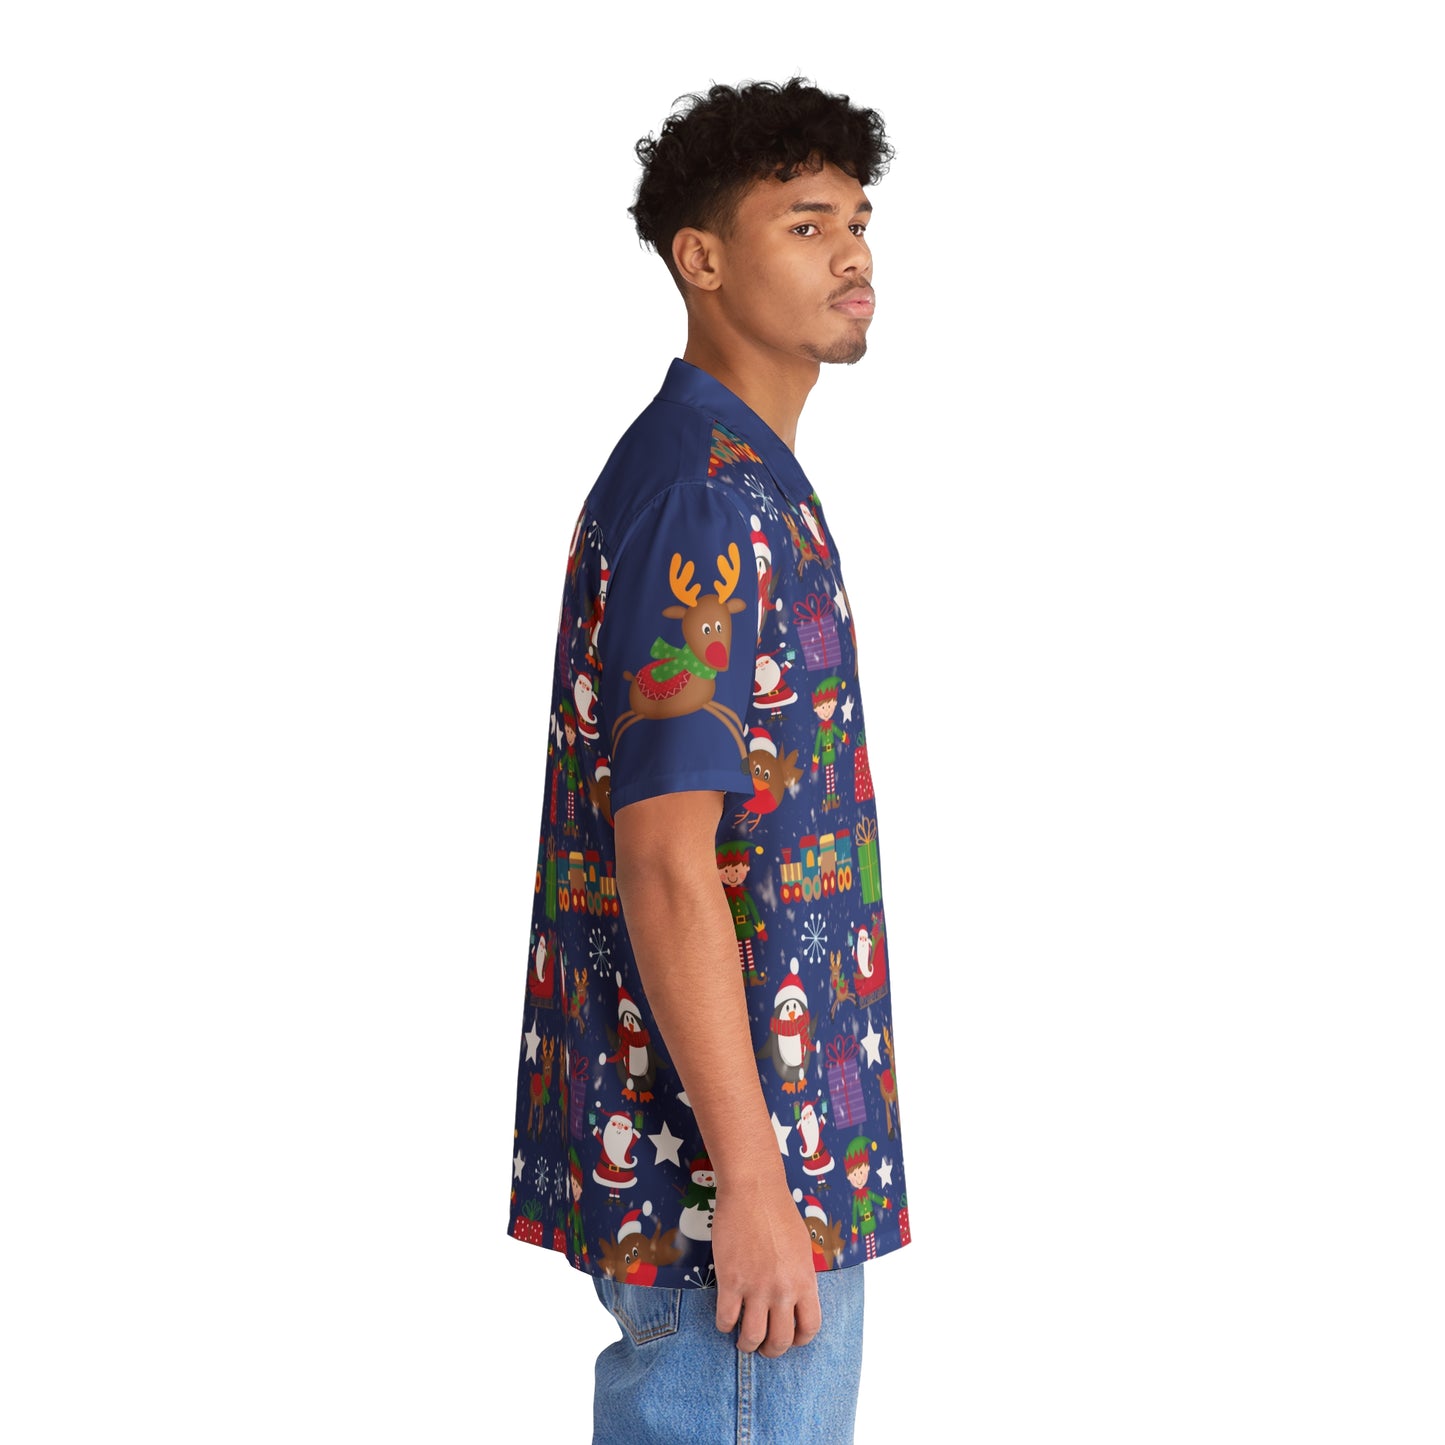 Not So Ugly - Hawaiian Style Shirt